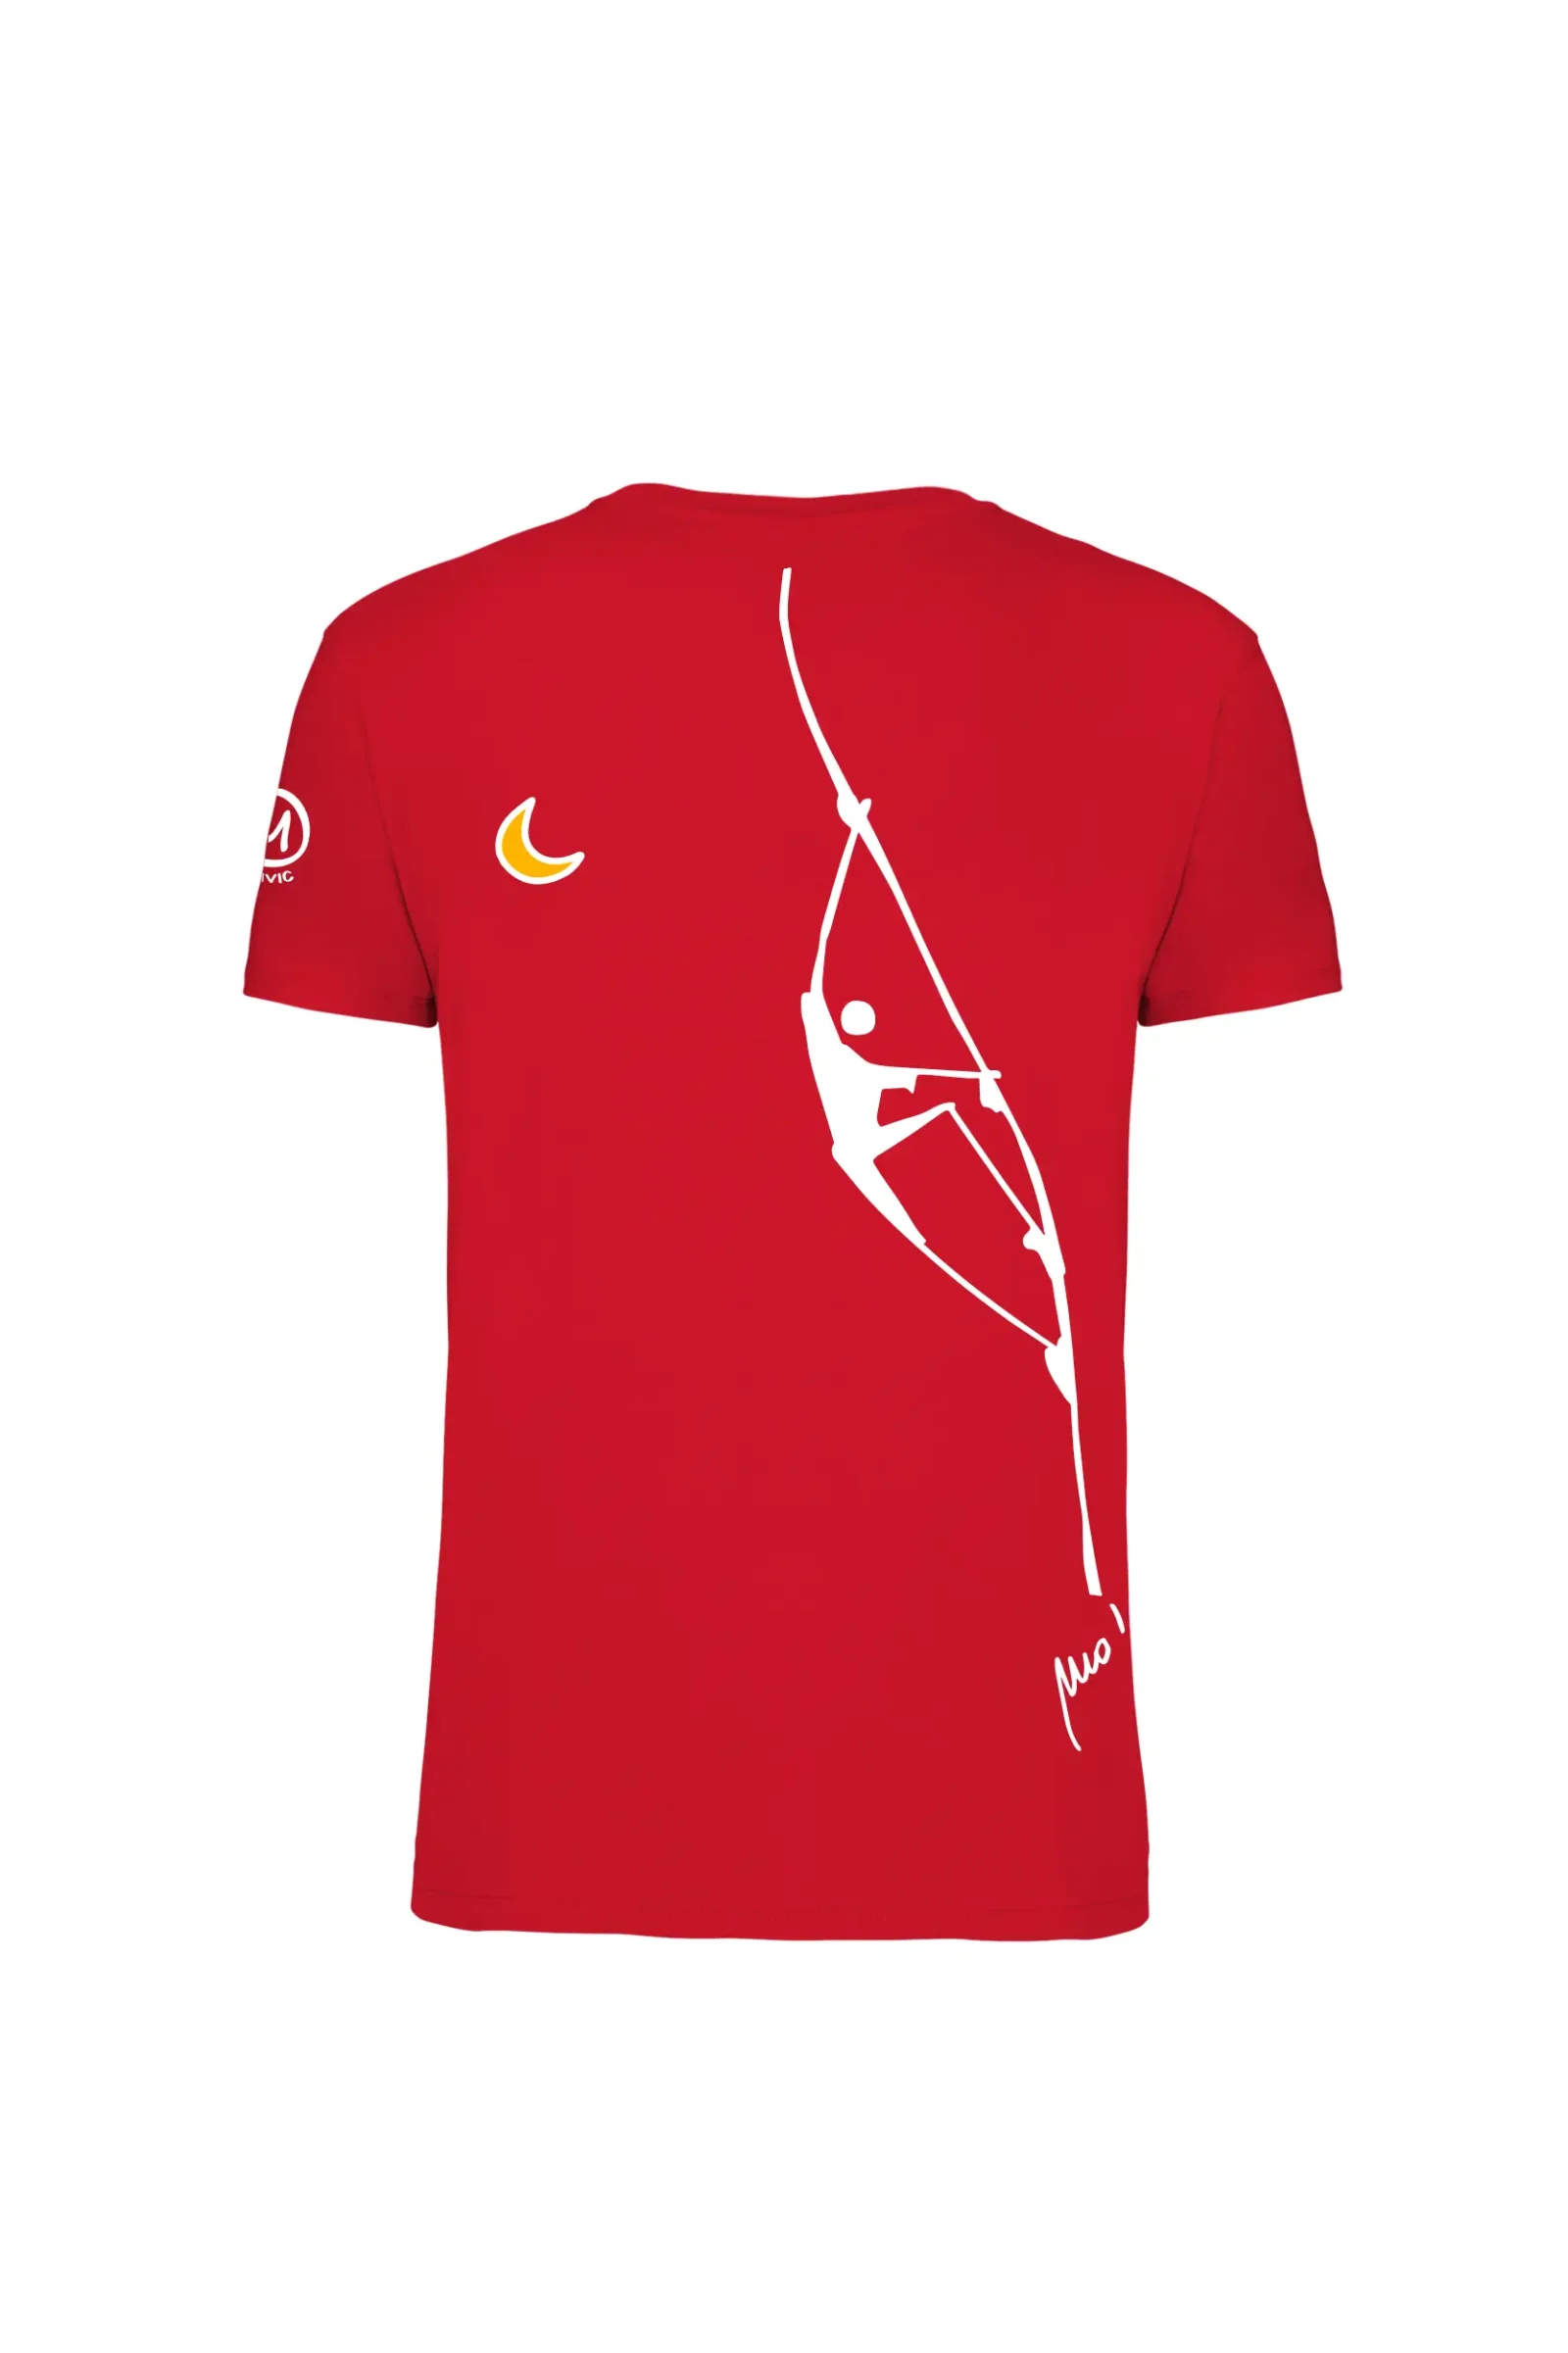 Red men's t-shirt with "Teba" climbing graphics - Monvic HASH